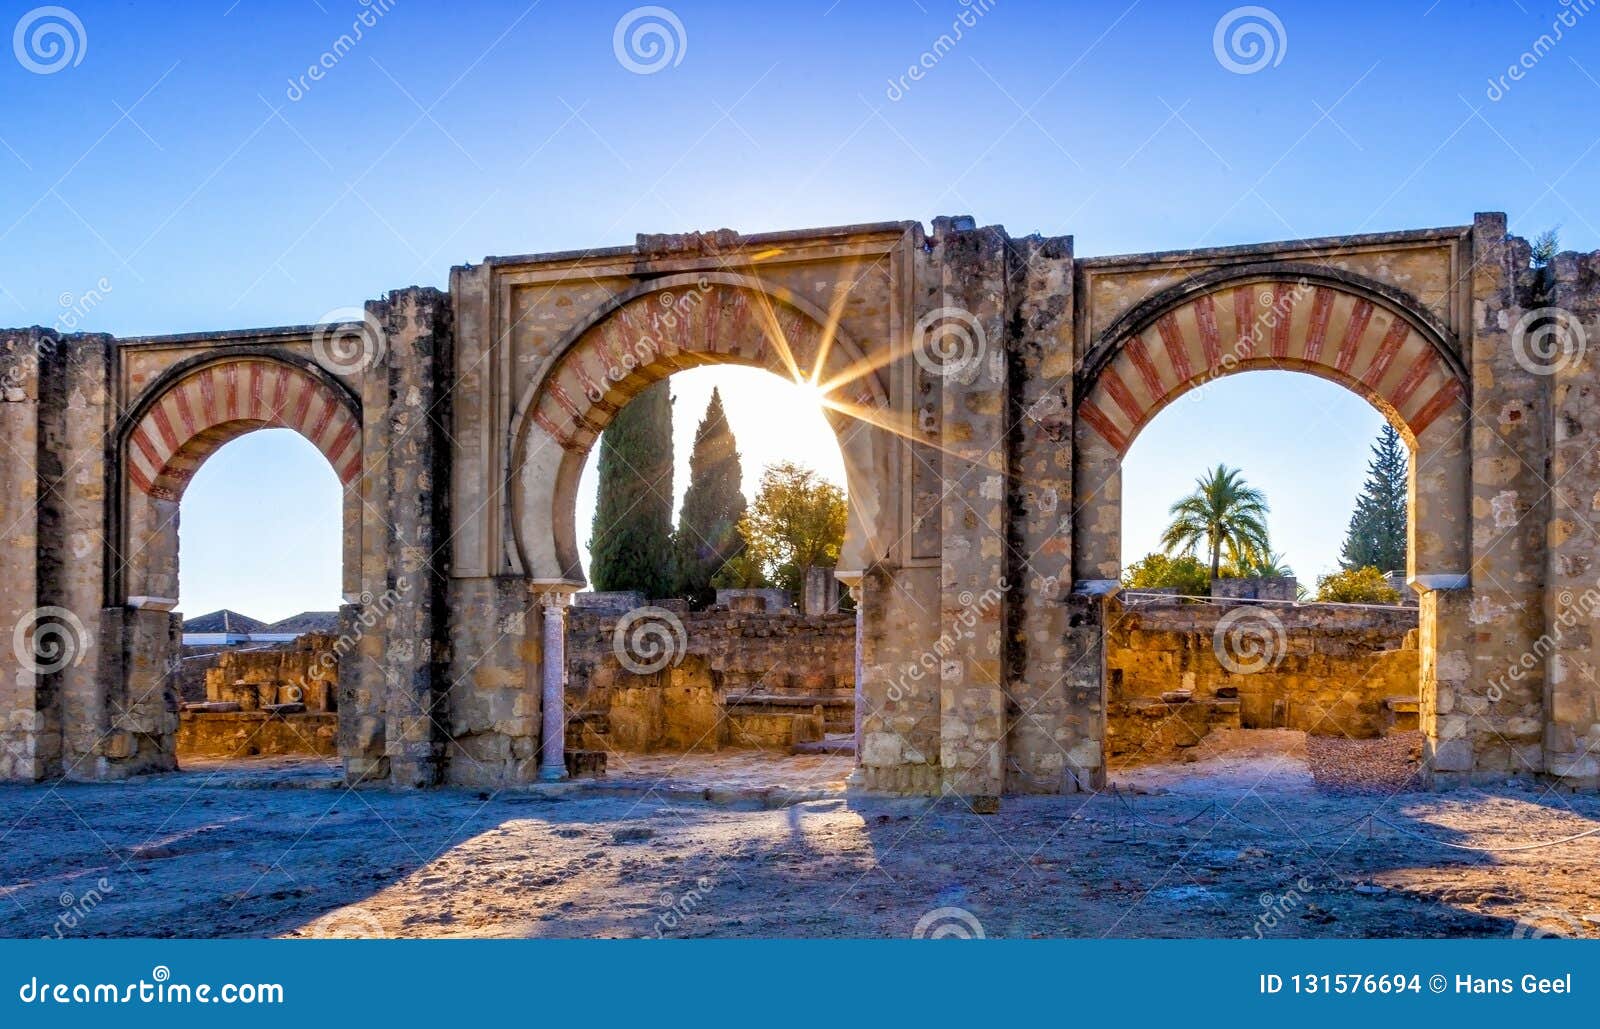 medina azahara, a fortified arab muslim medieval palace-city near cordoba, spain